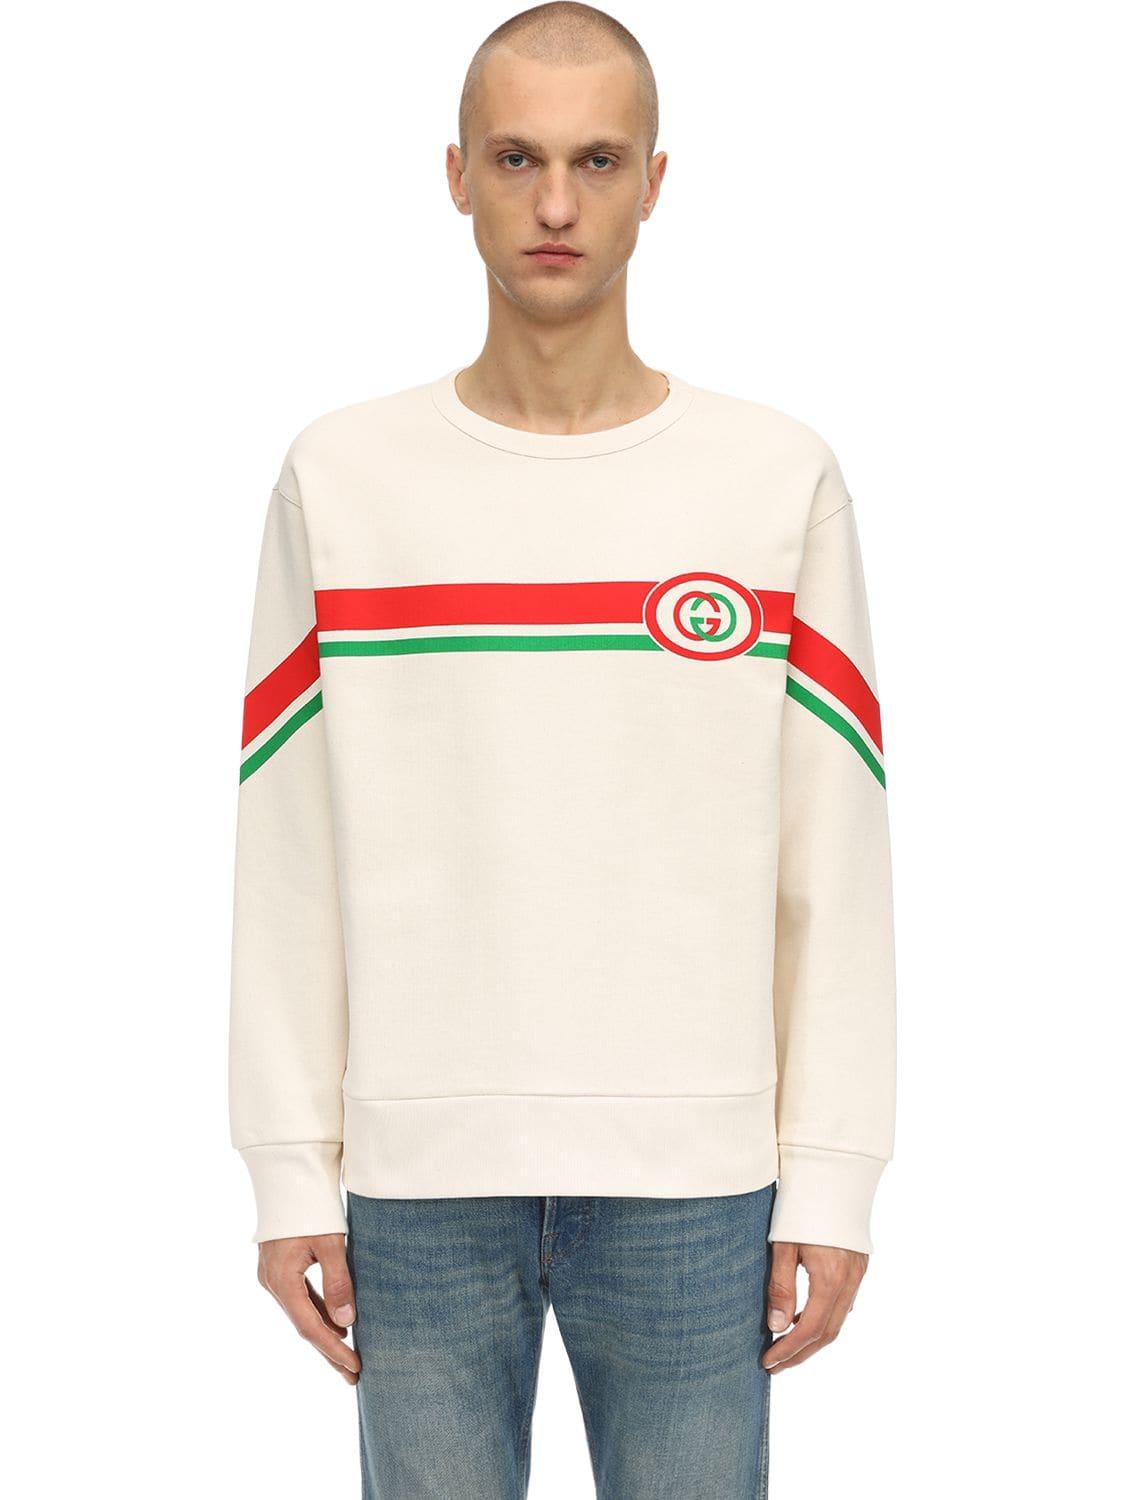 Gucci Gg Logo Print Cotton Sweatshirt in White for Men - Lyst